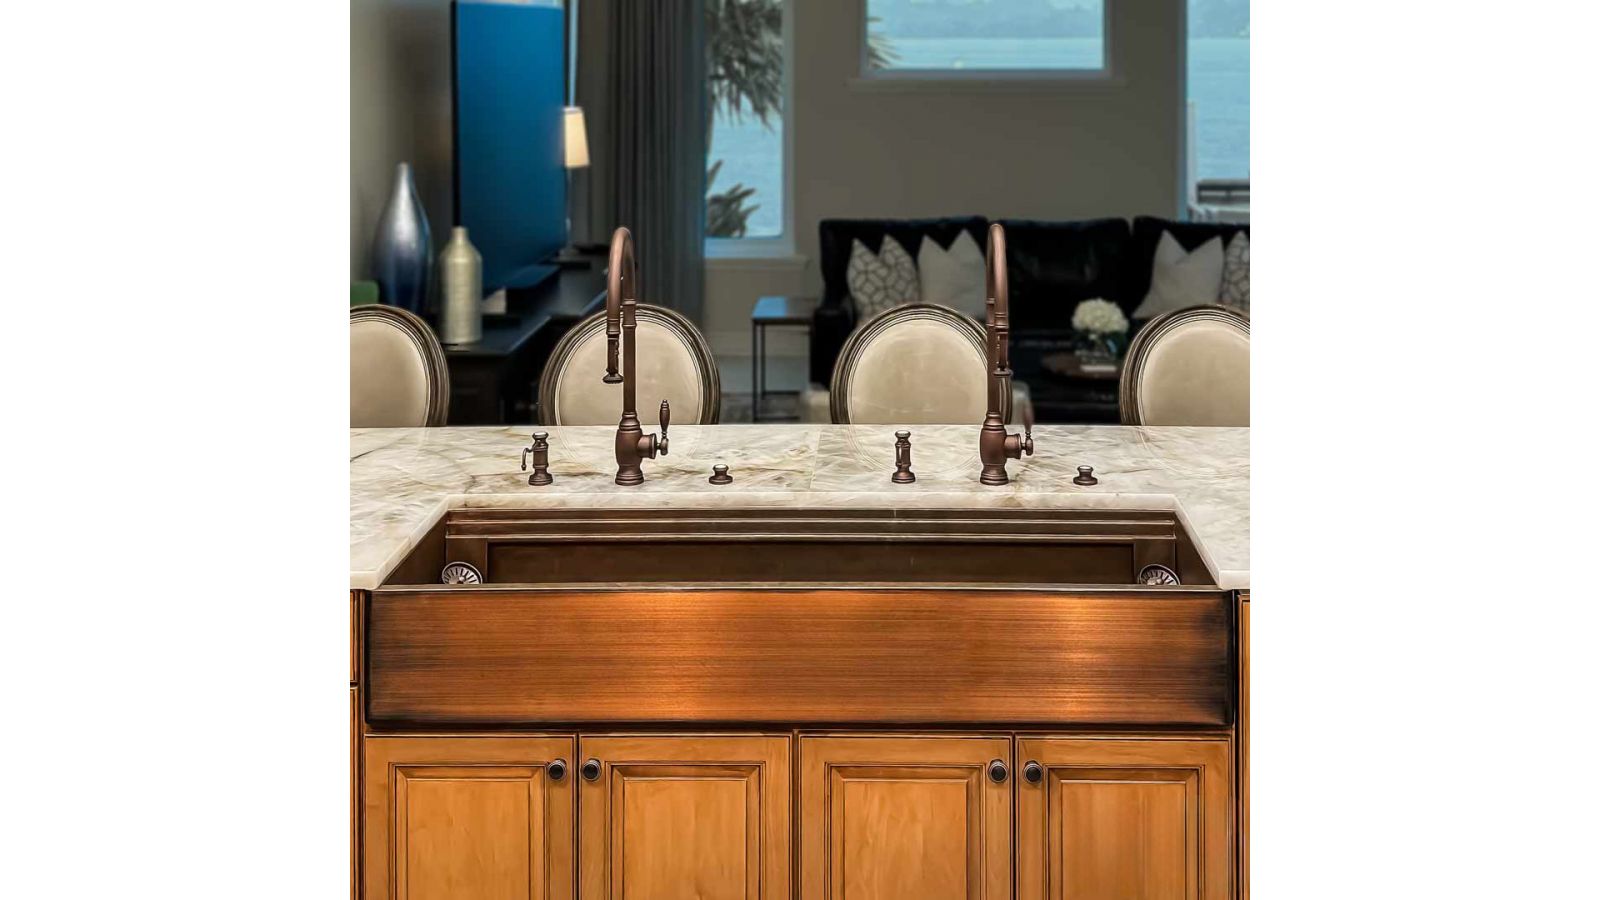 Custom Kitchen Workstation Sink with a Dual Drain Design 